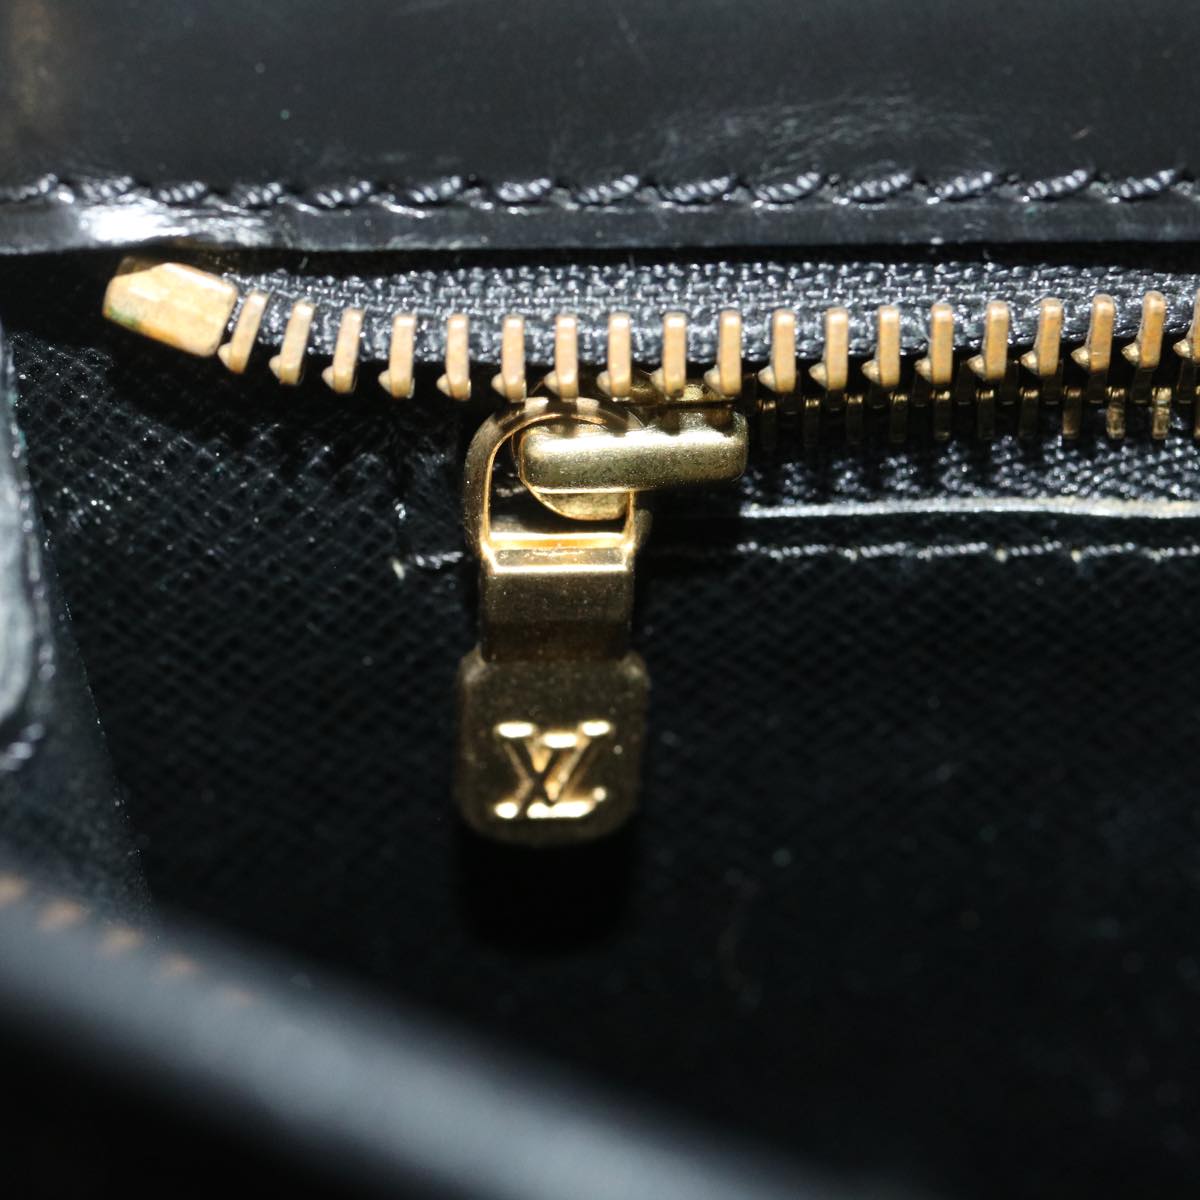 Vintage Two Way Shoulder Bag, Enghien Louis Vuitton (Lot 2017 - Luxury  Accessories, Estate Jewelry, Sterling Silver, & Rare CoinsDec 9, 2021,  10:00am)